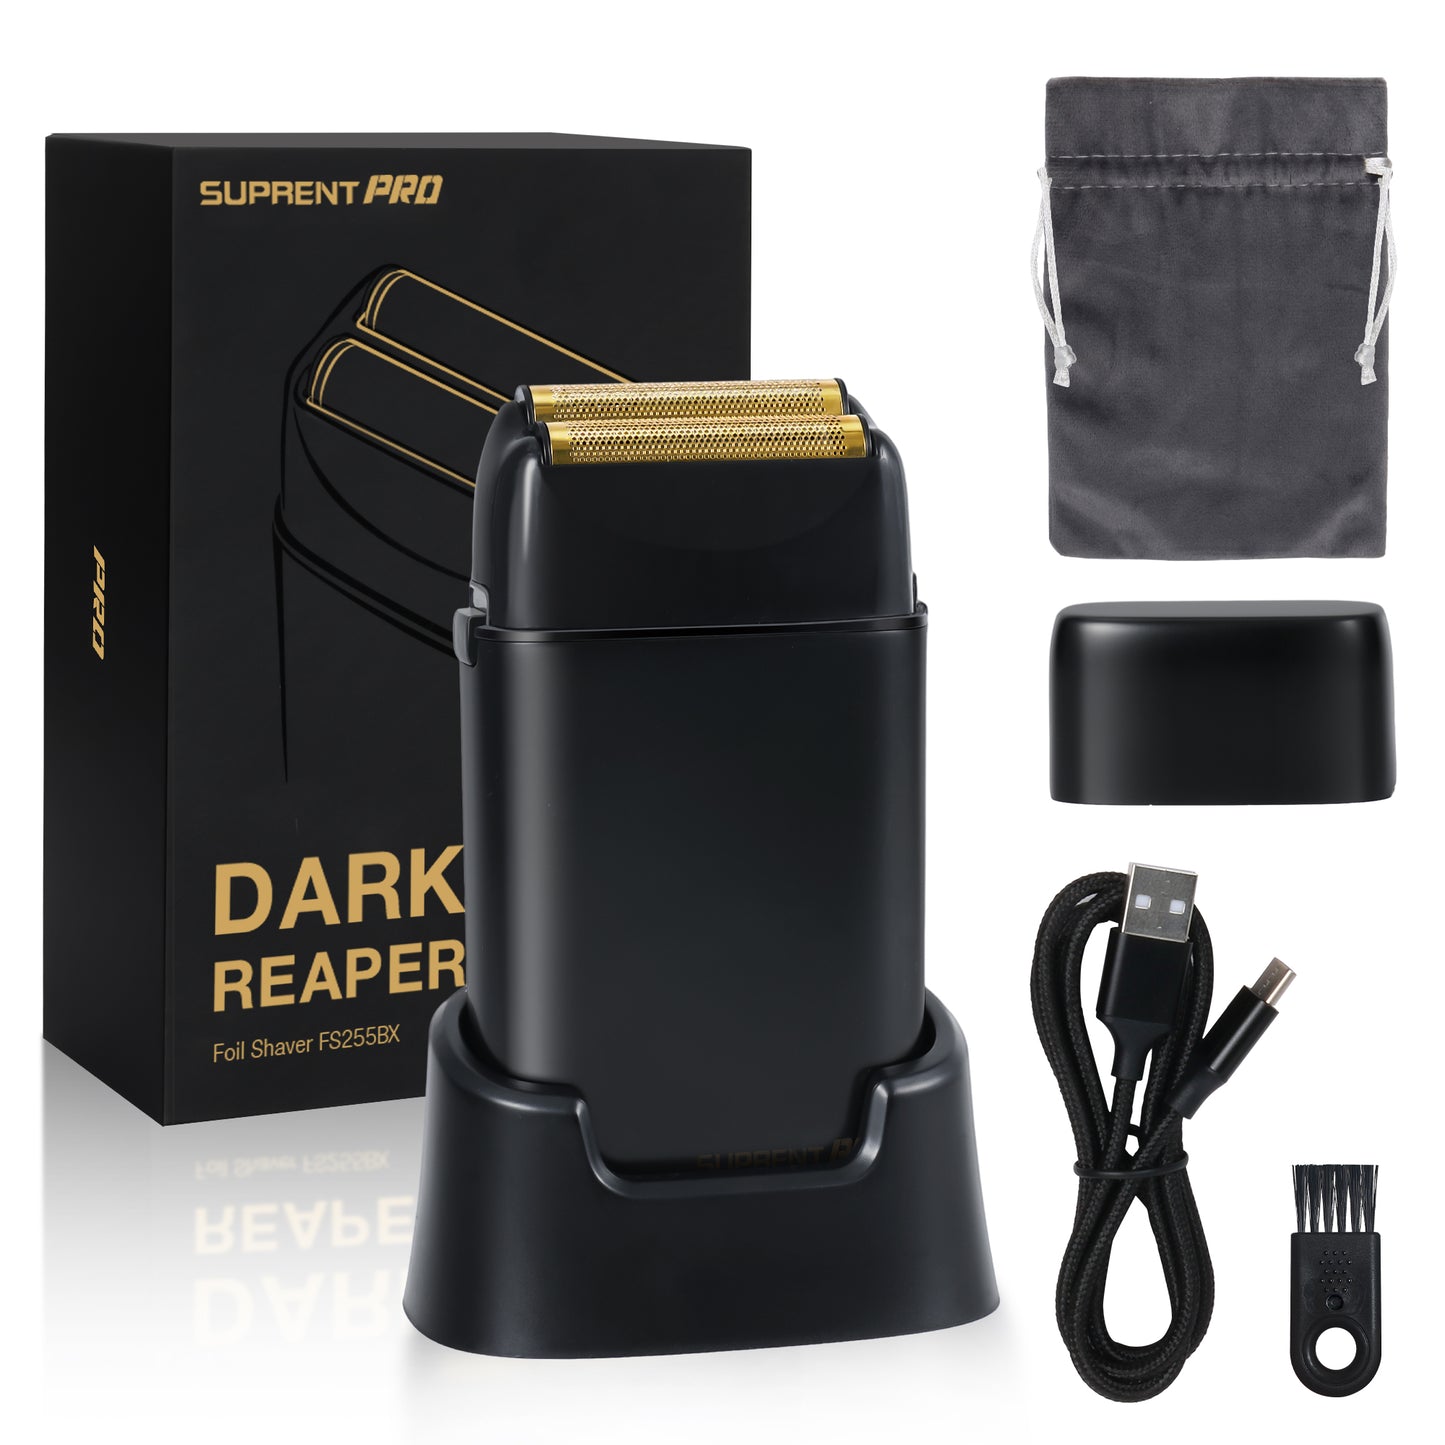 The Dark Reaper Professional Double Foil Shaver - FS255BX